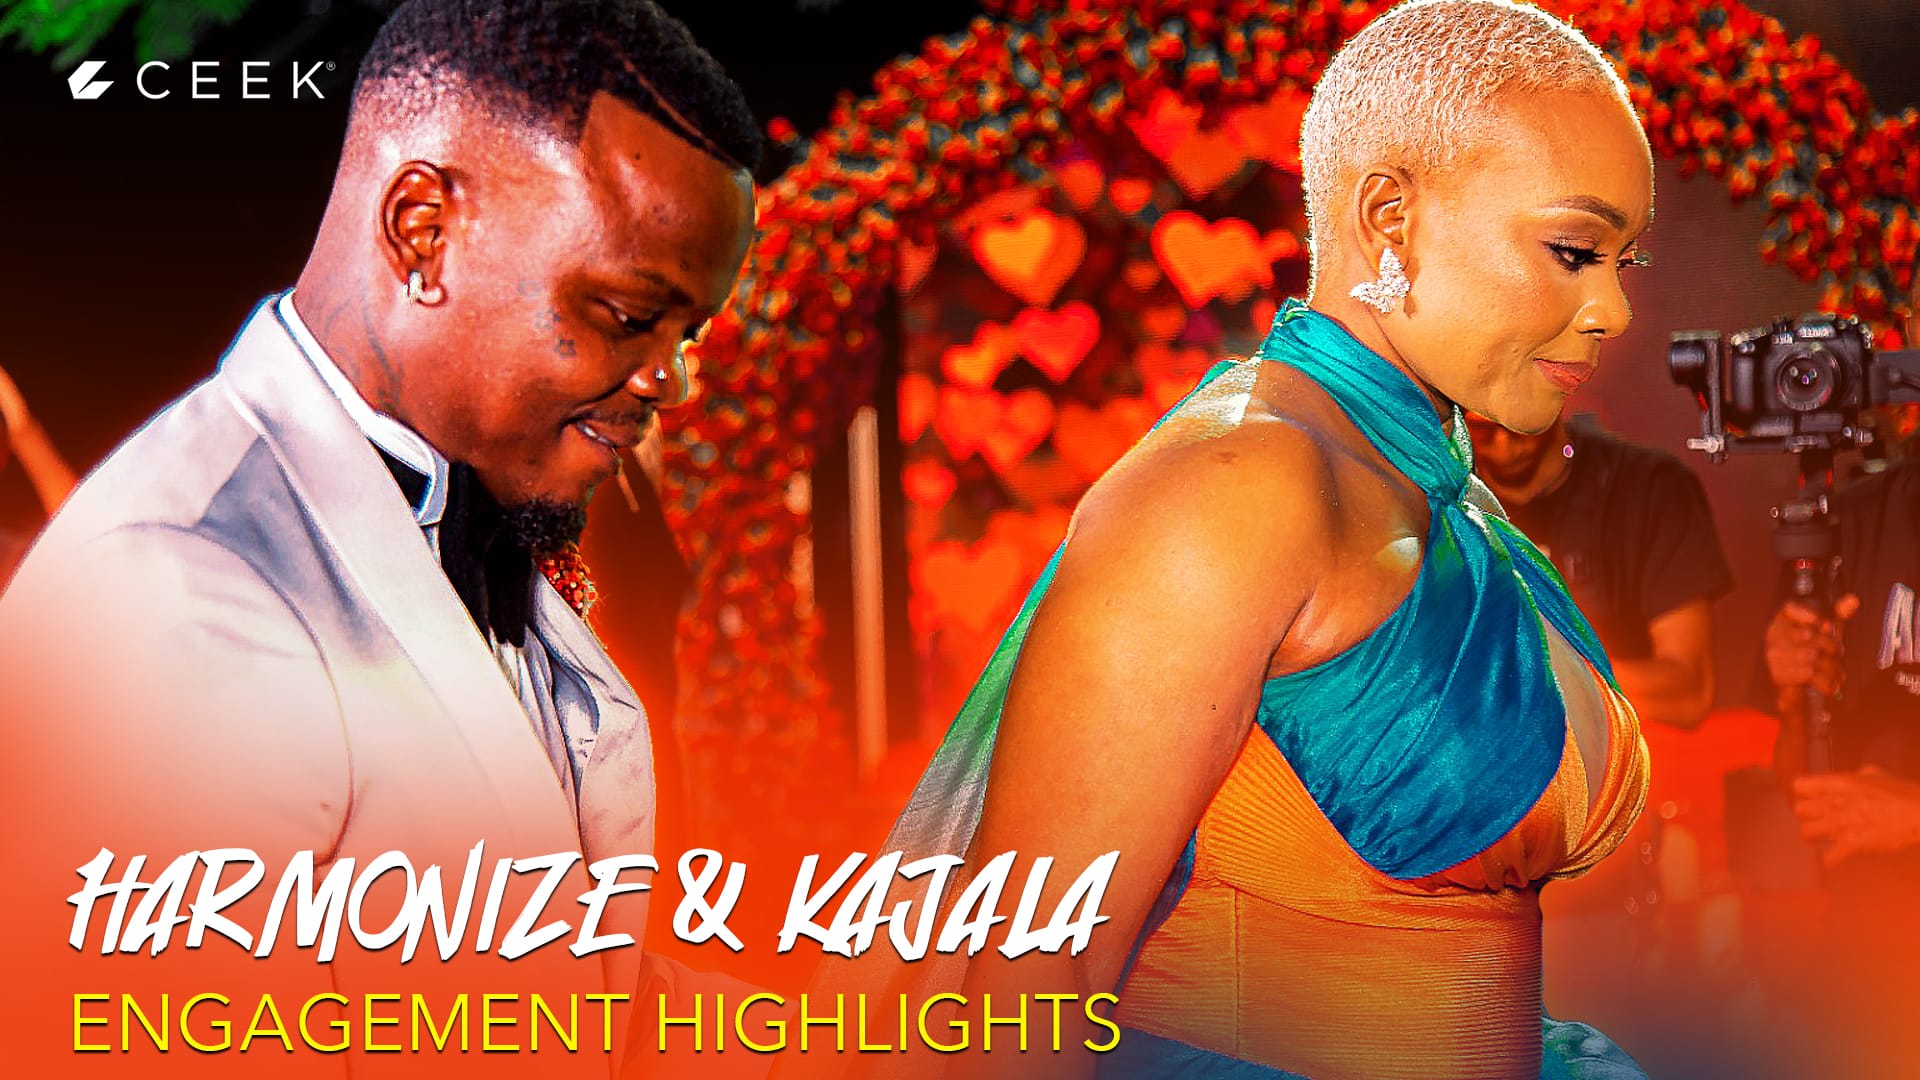 Harmonize and Kajala Engagement Highlights